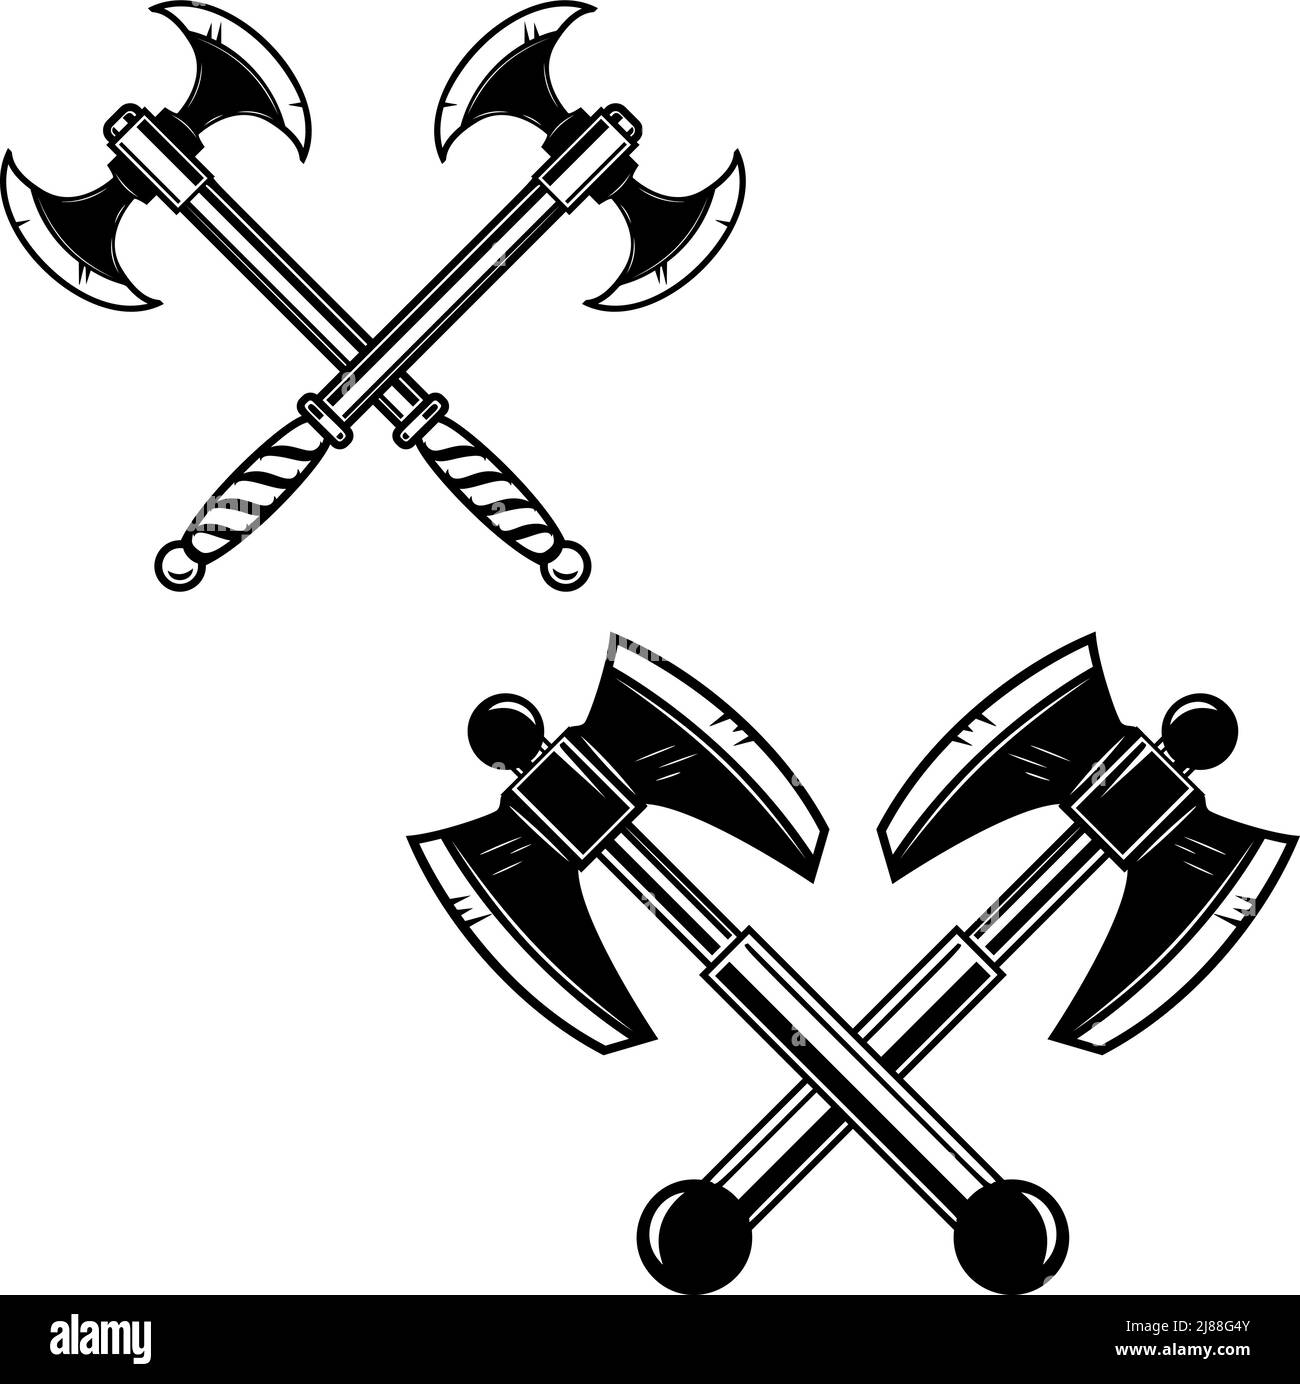 Set of Illustrations of ancient battle axe in monochrome style. Design element for logo, emblem, sign, poster, t shirt. Vector illustration Stock Vector